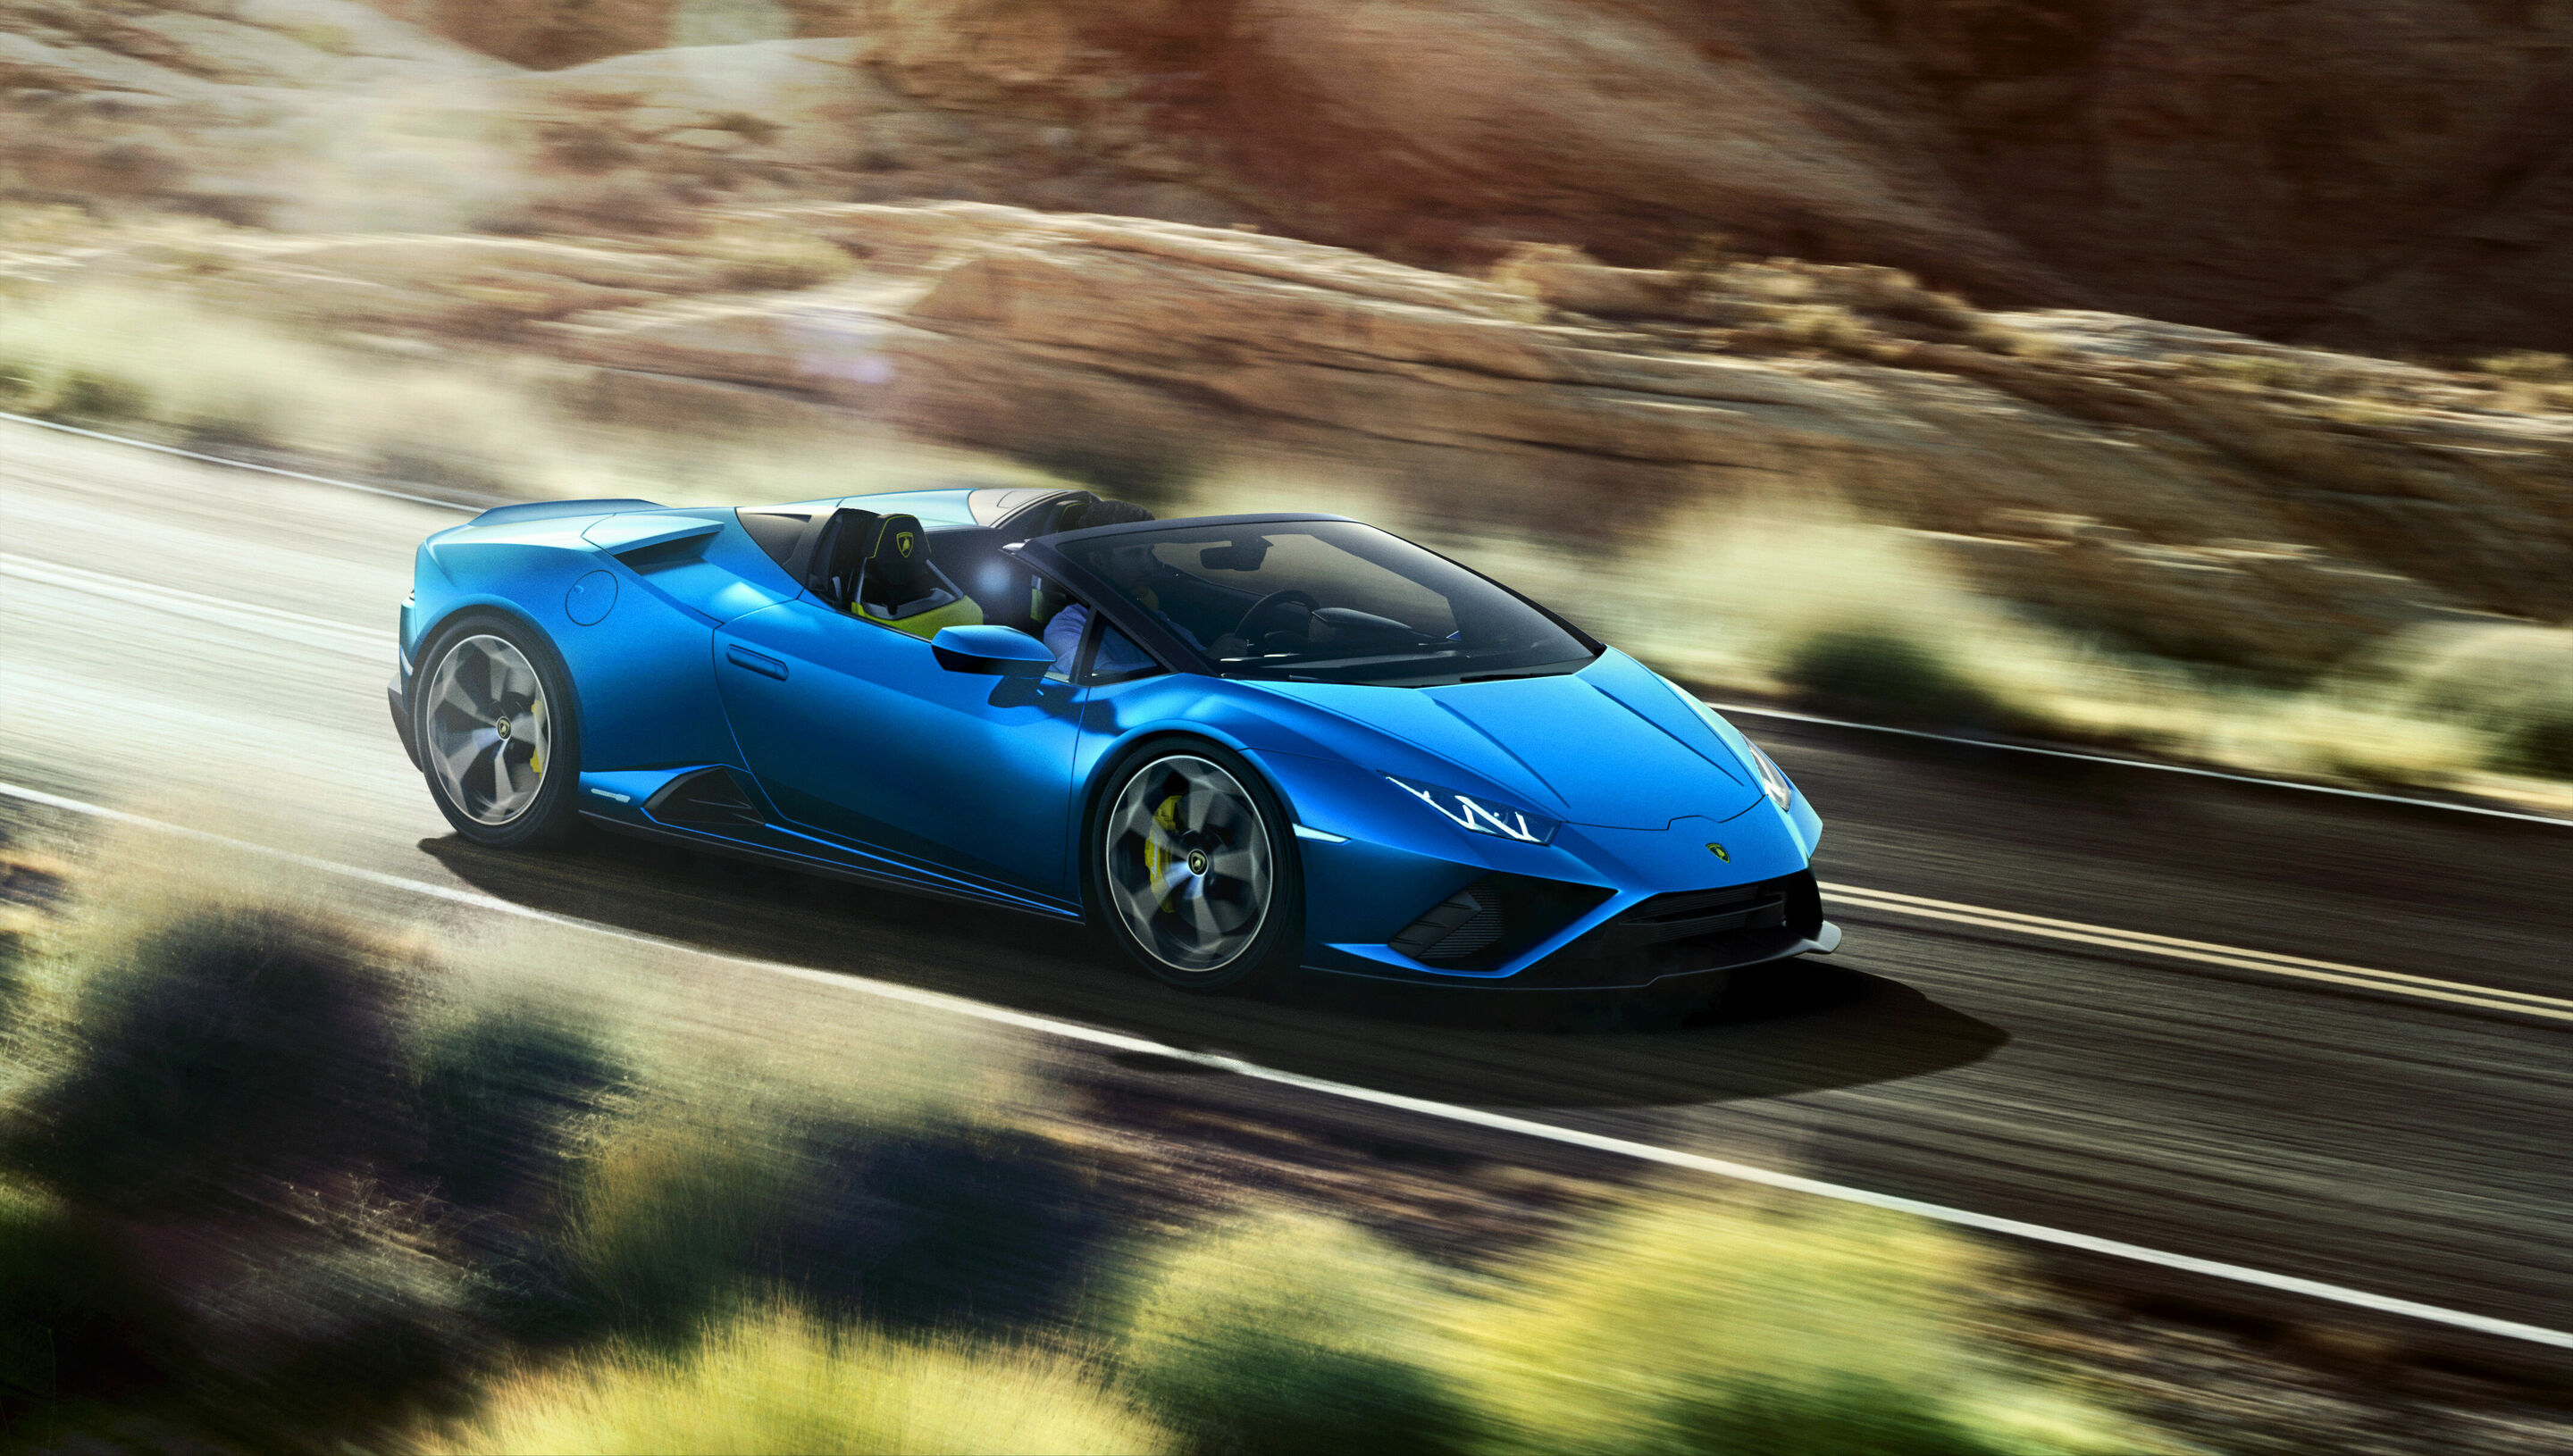 Automobili Lamborghini closes 2020 with 7,430 cars delivered and